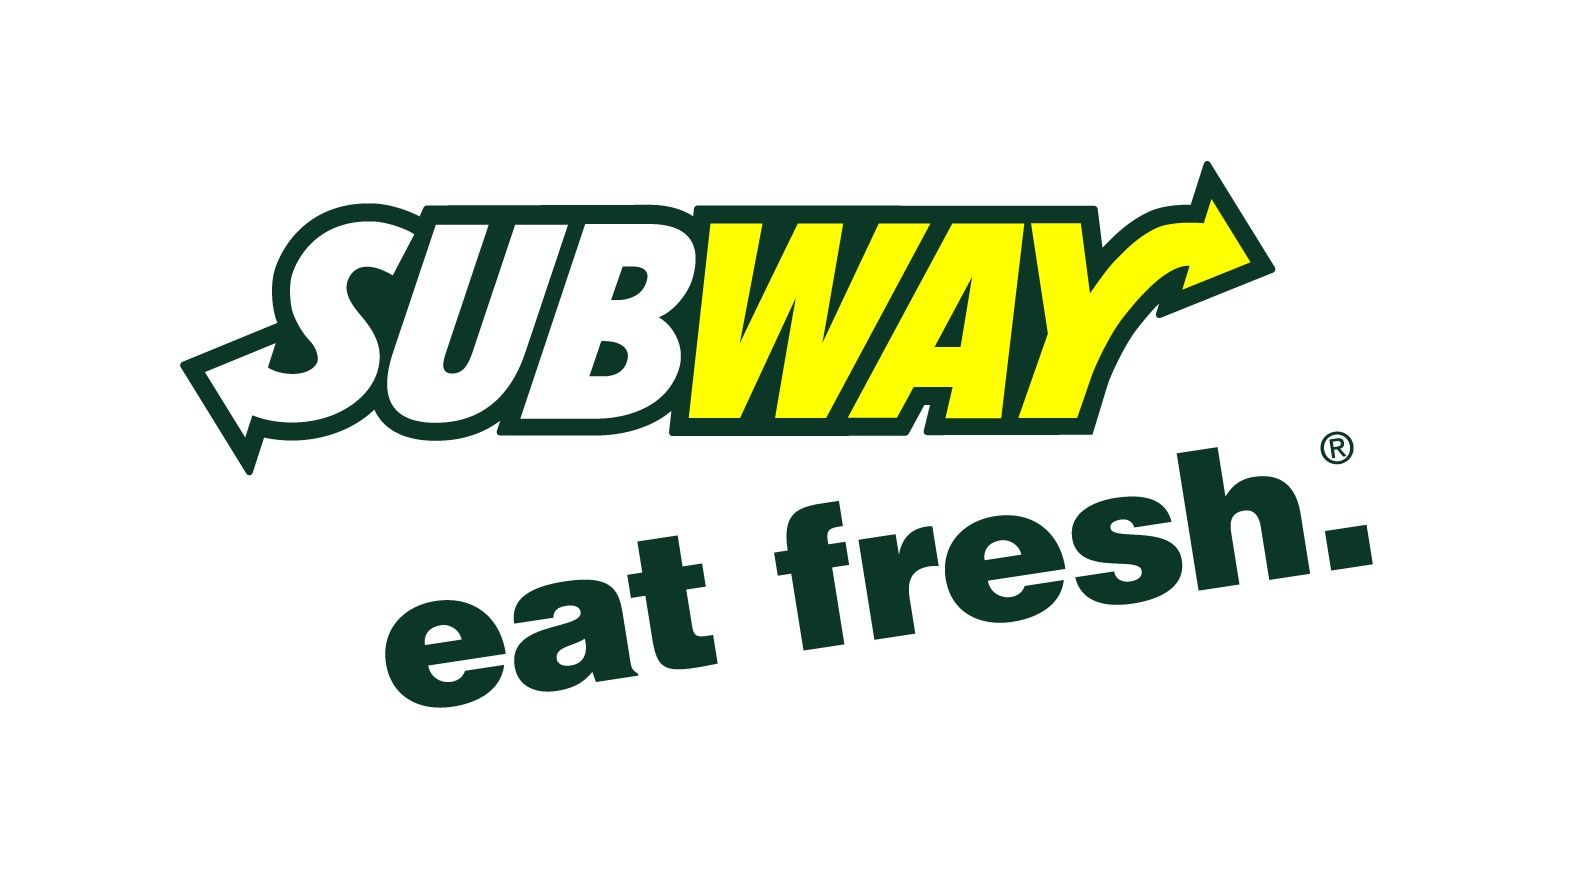 Subway eat fresh. 